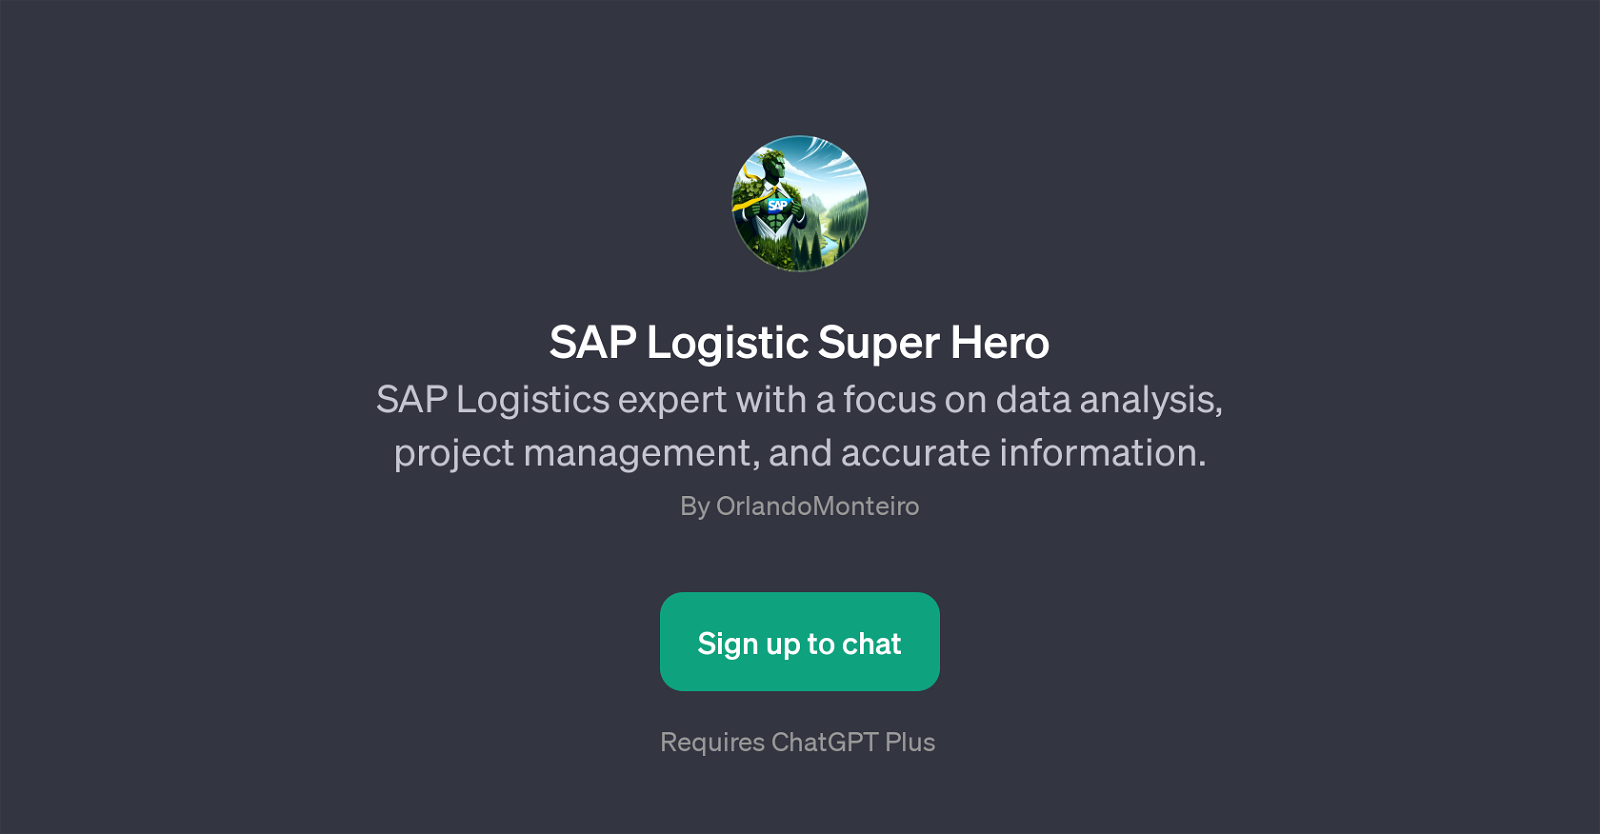 SAP Logistic Super Hero website